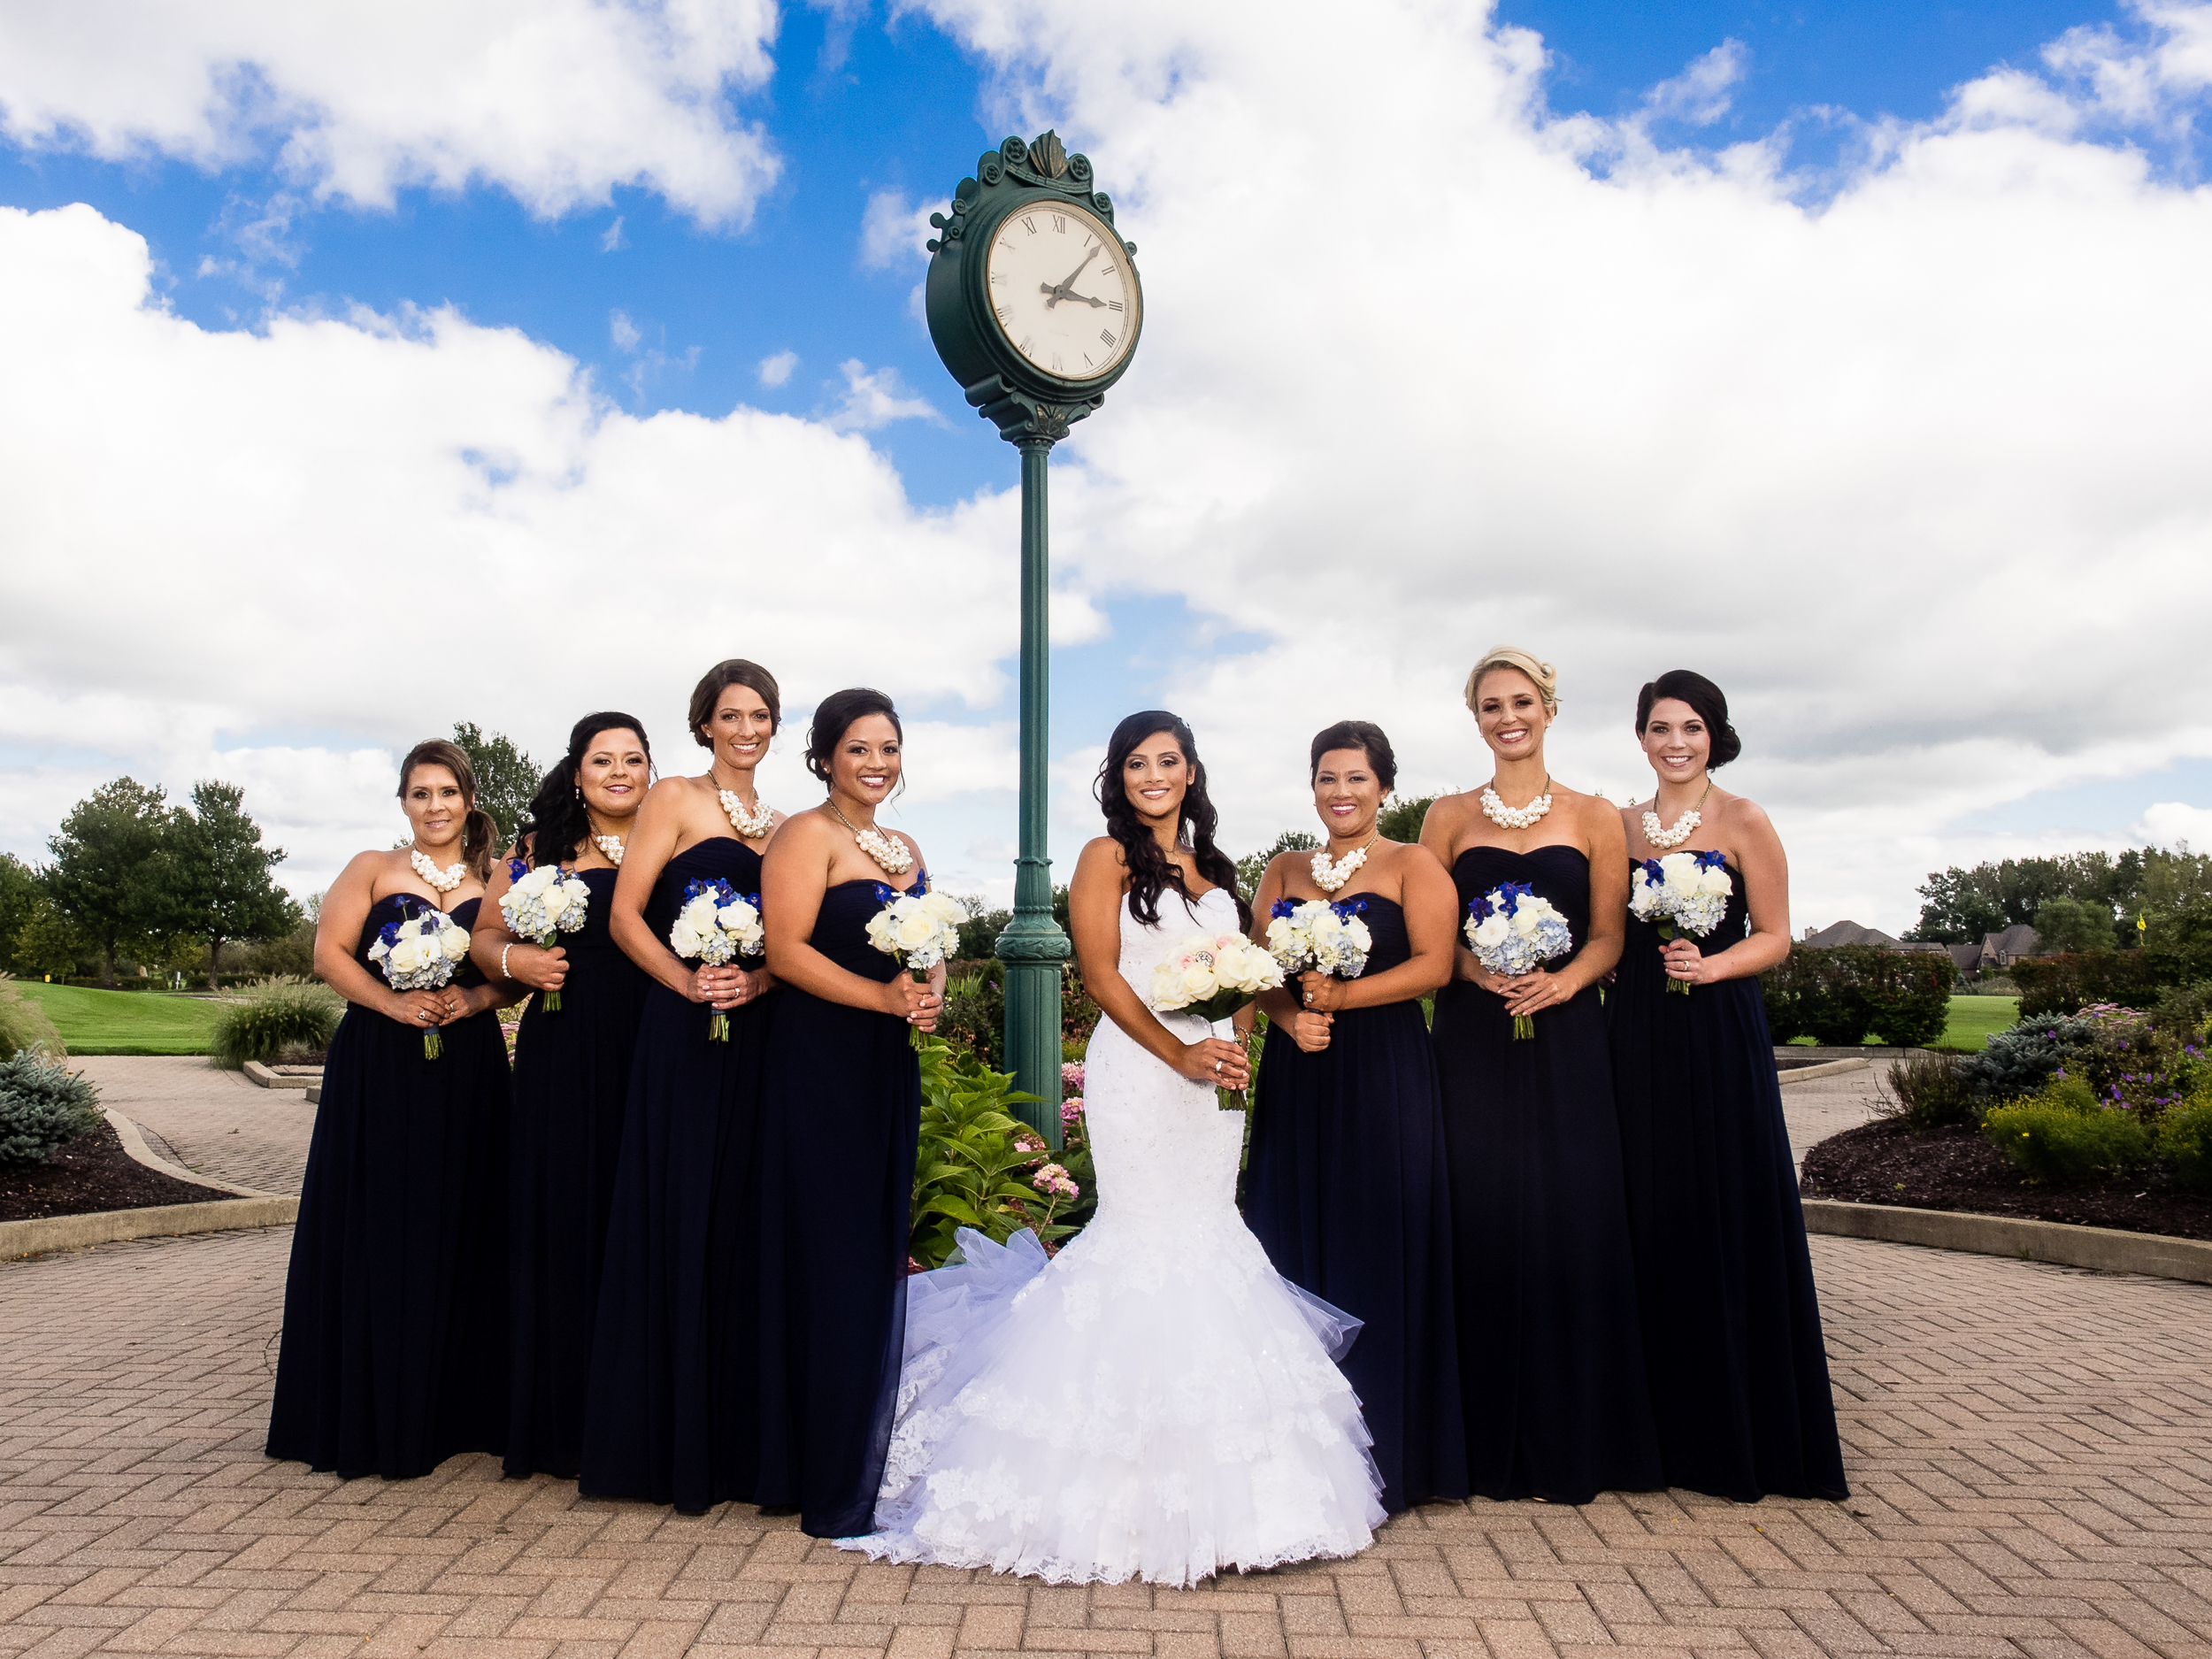 Sand Creek Country Club Wedding Venue - Northwest Indiana Wedding Photographer Region Weddings